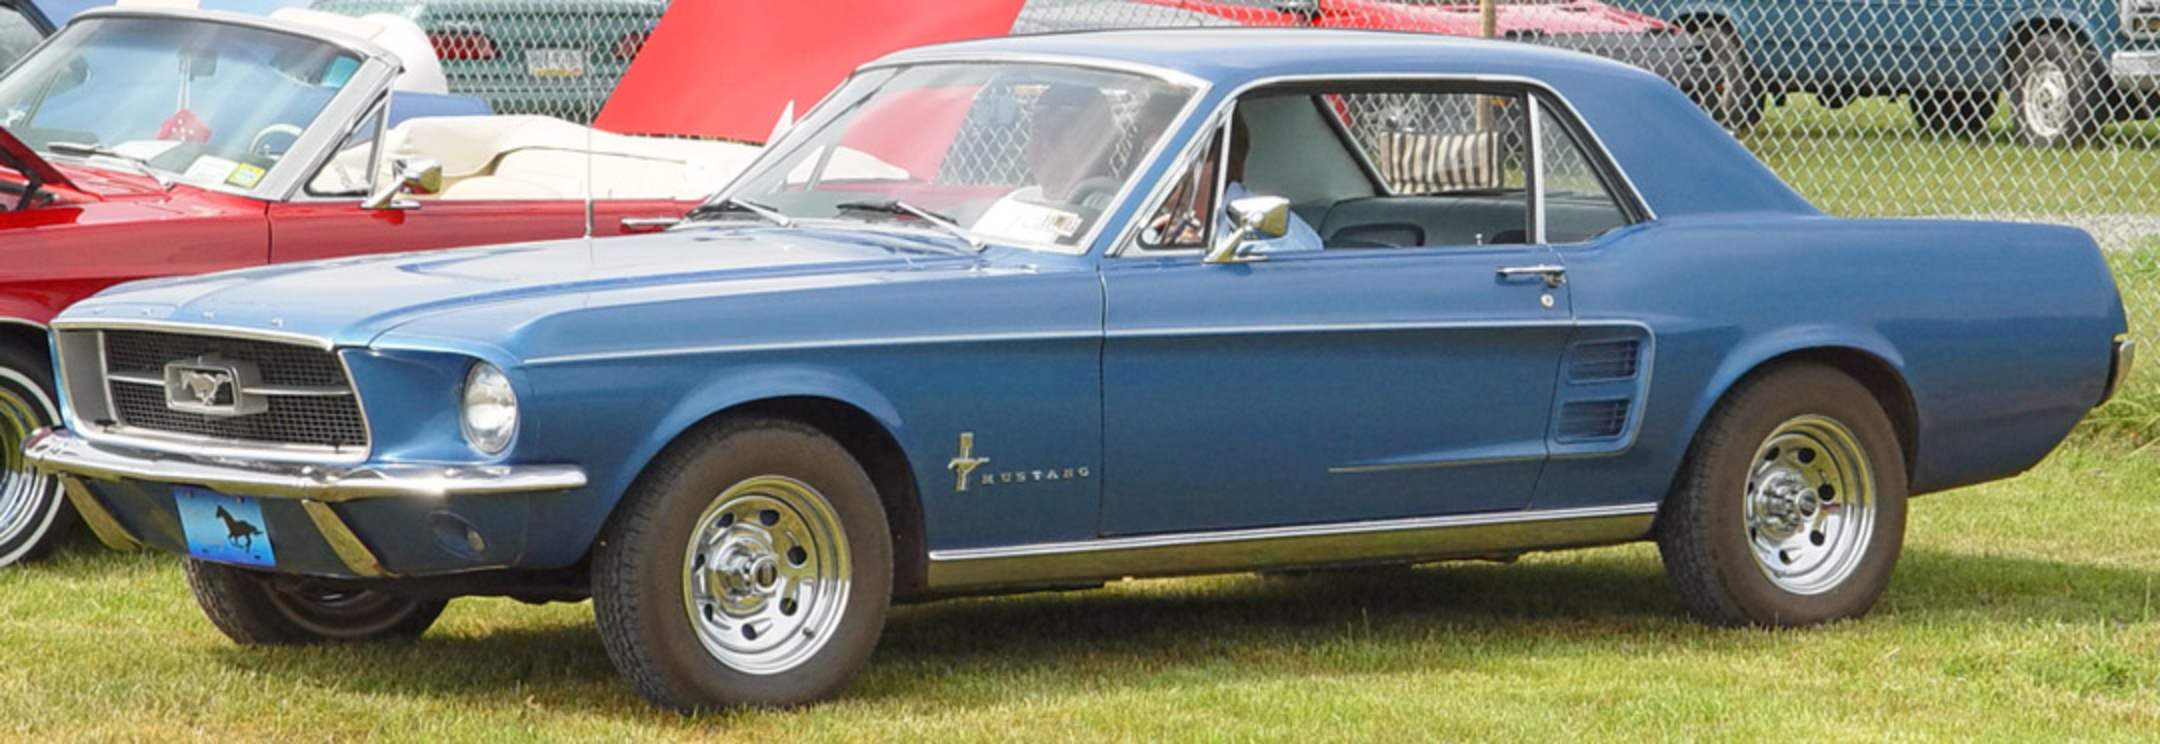 Ford Mustang Coupé 1967 - Angle latéral bleu. Copyright de l'image Roues Sérieuses